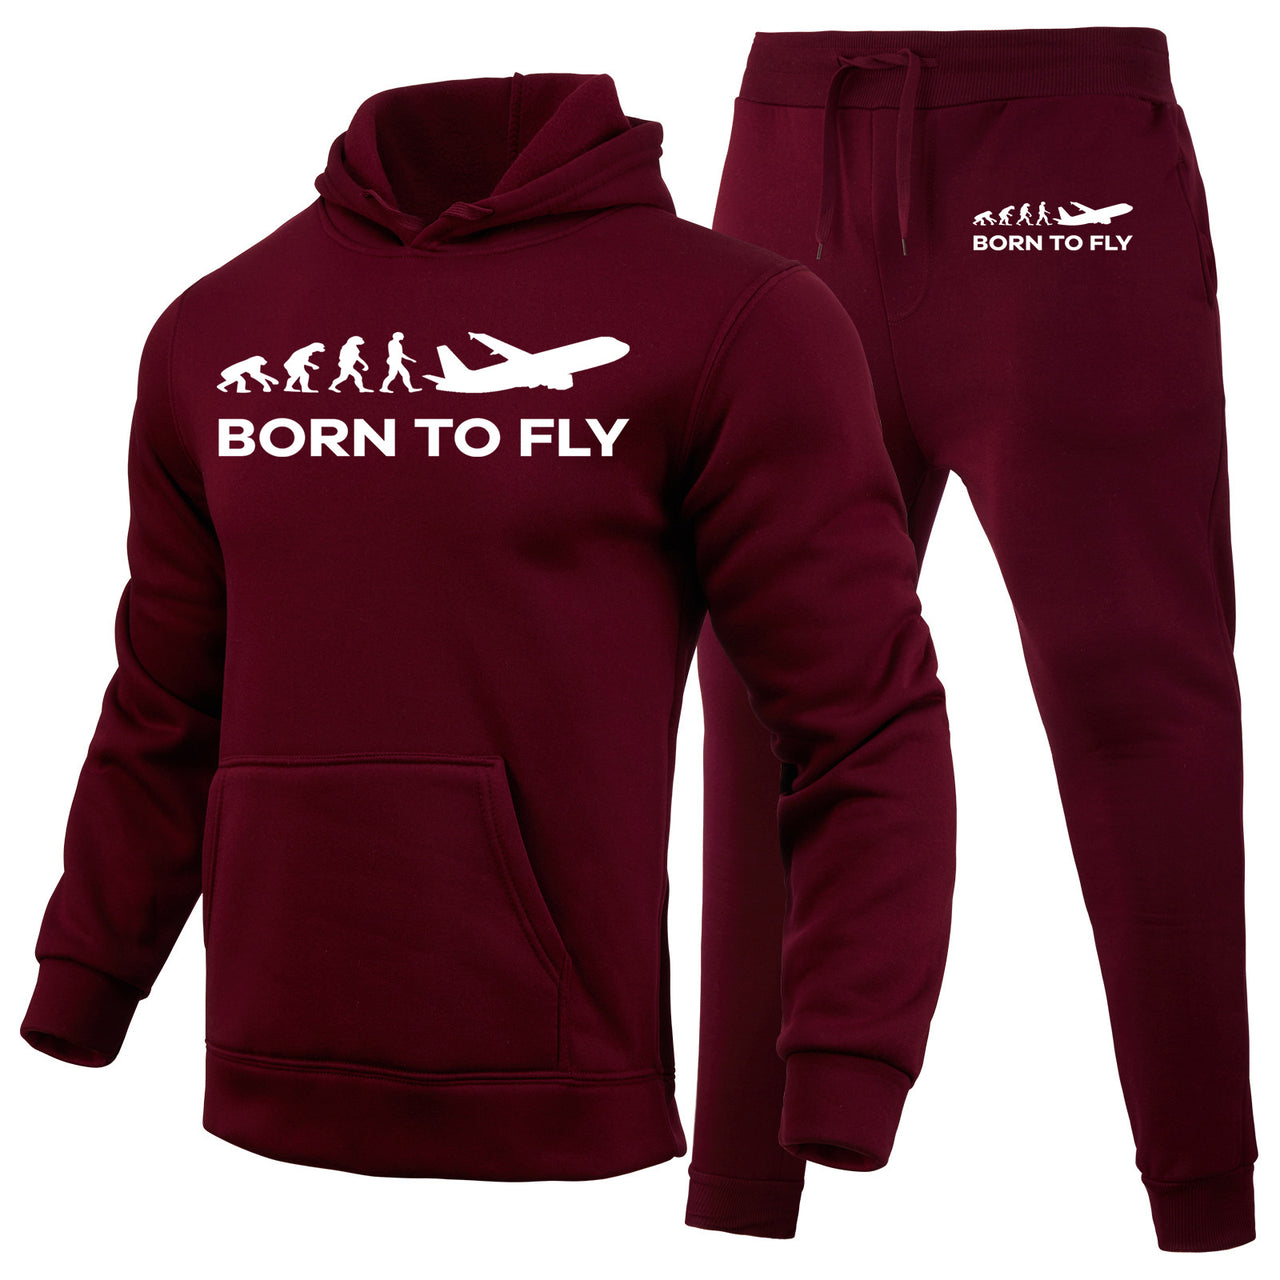 Born To Fly Designed Hoodies & Sweatpants Set